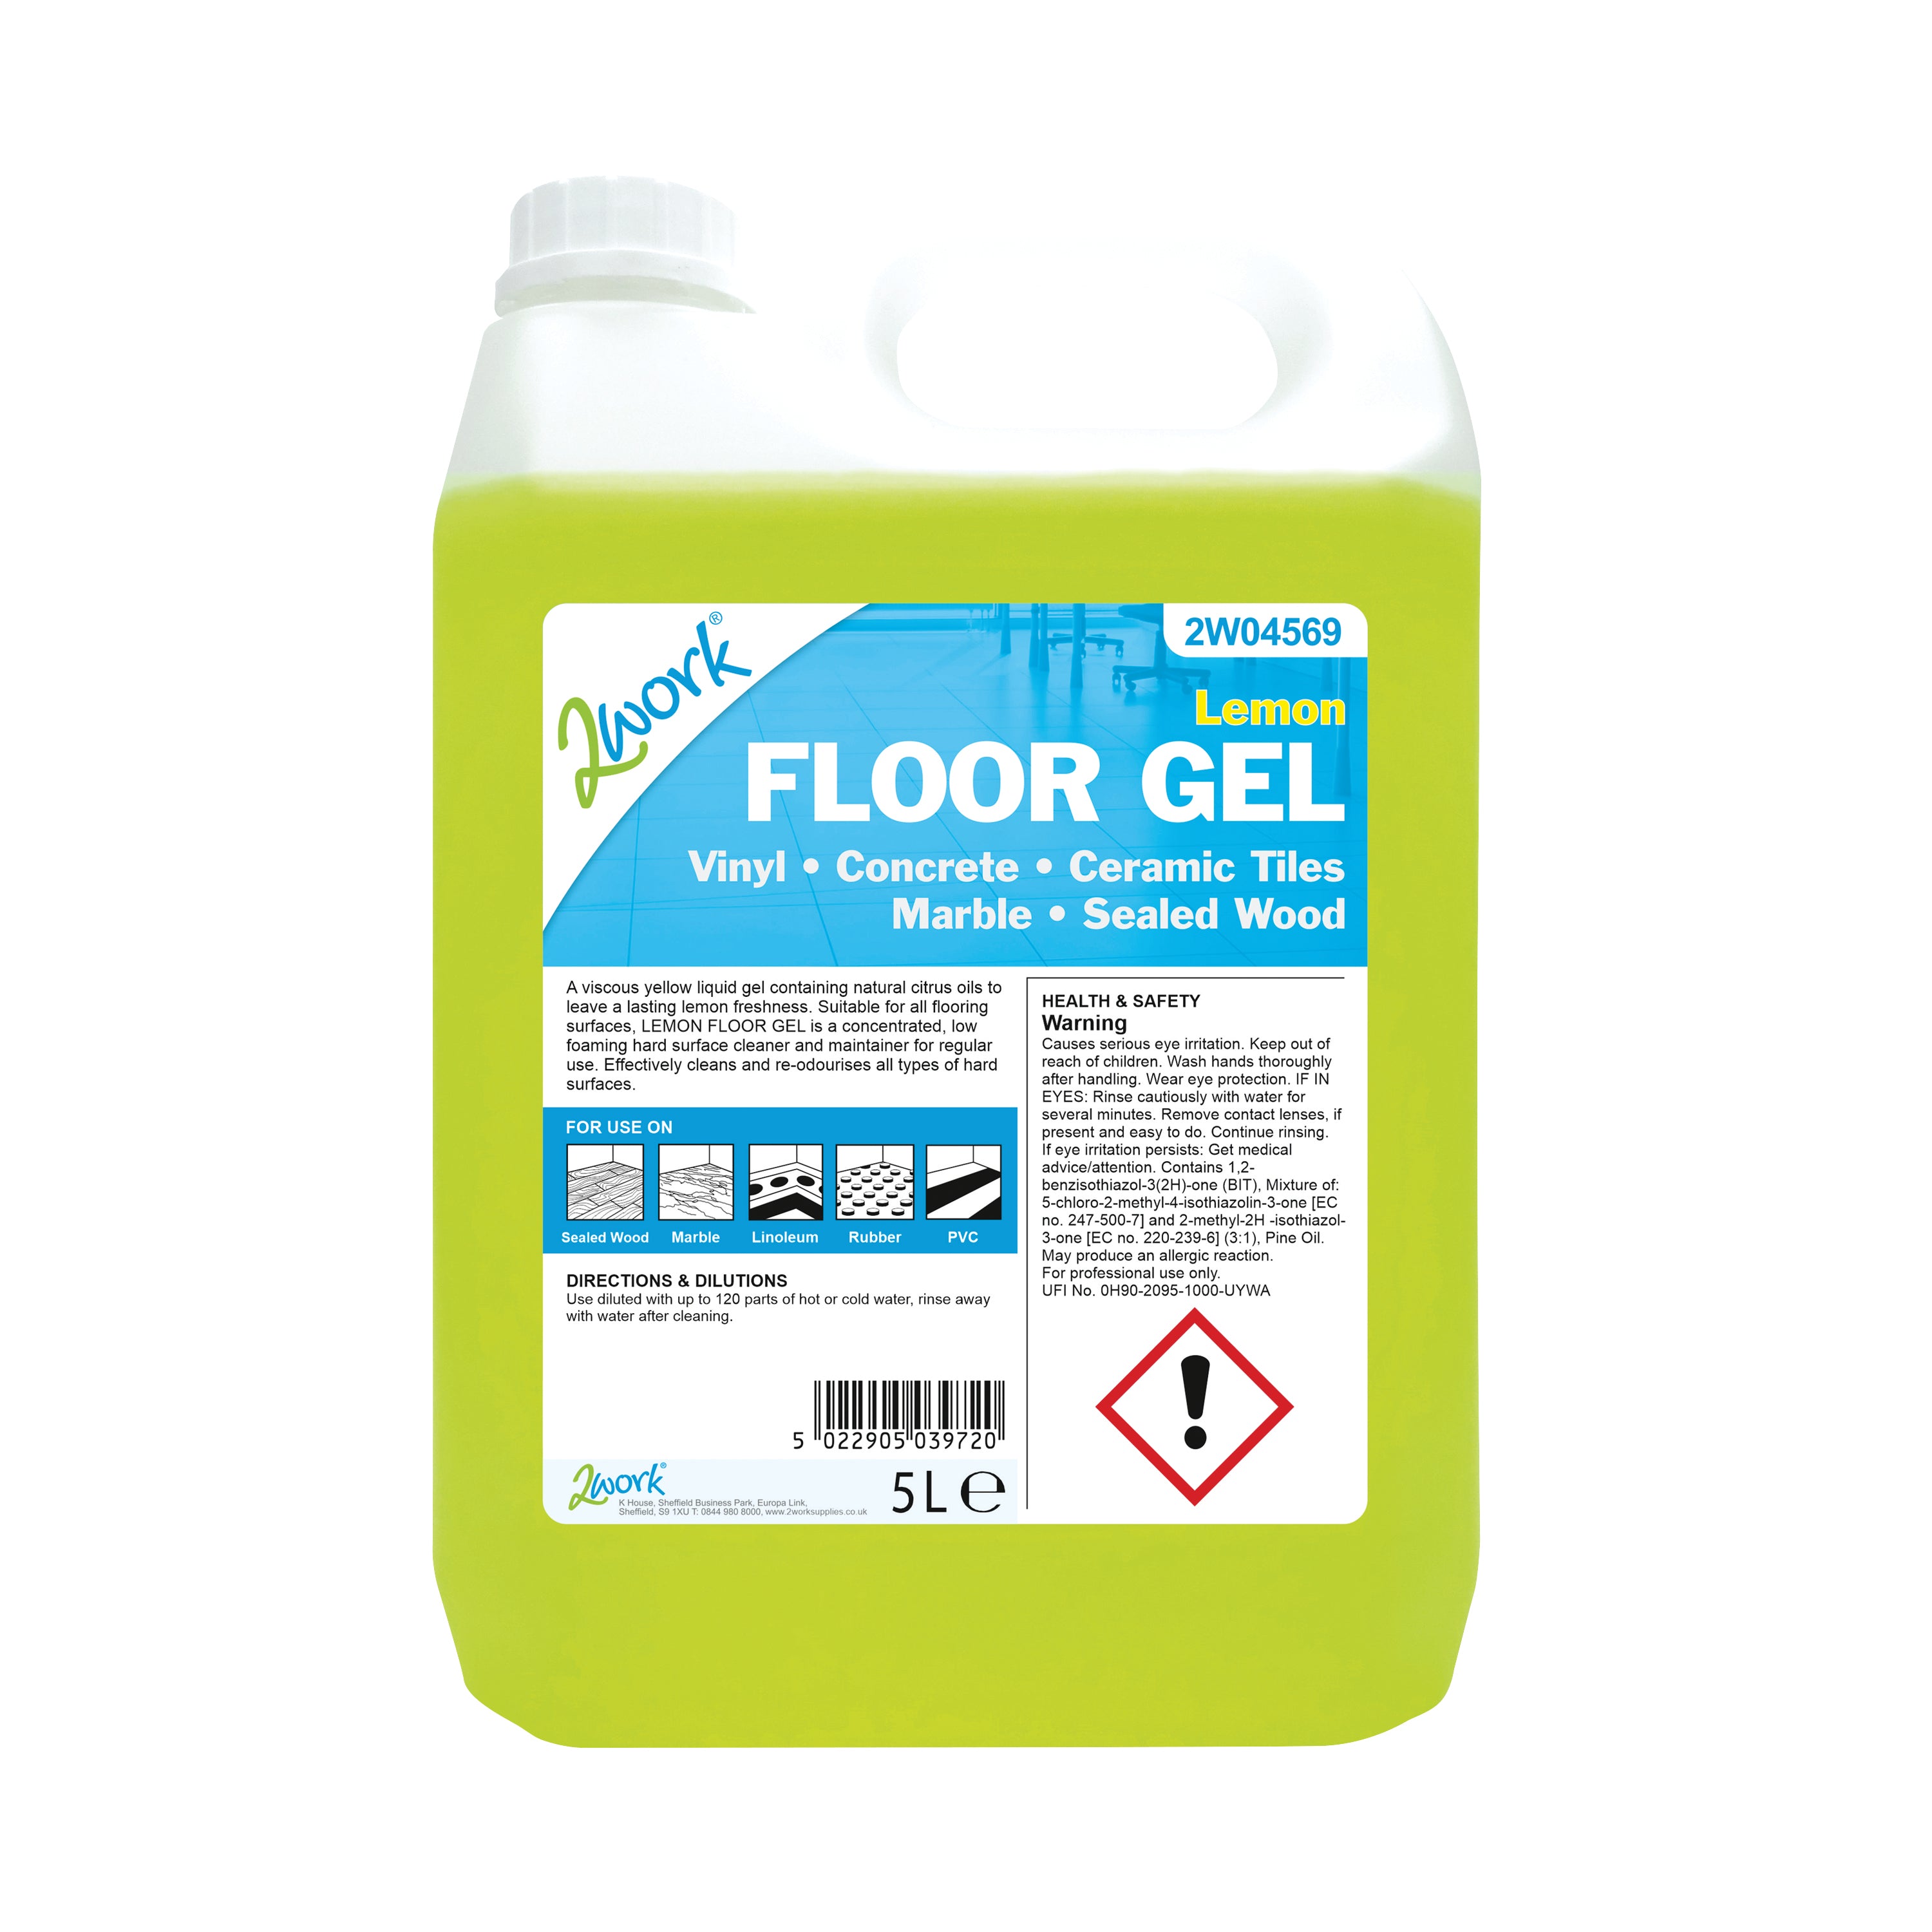 2Work Lemon Floor Gel Concentrate 5 Litre Bulk Bottle 2W04569